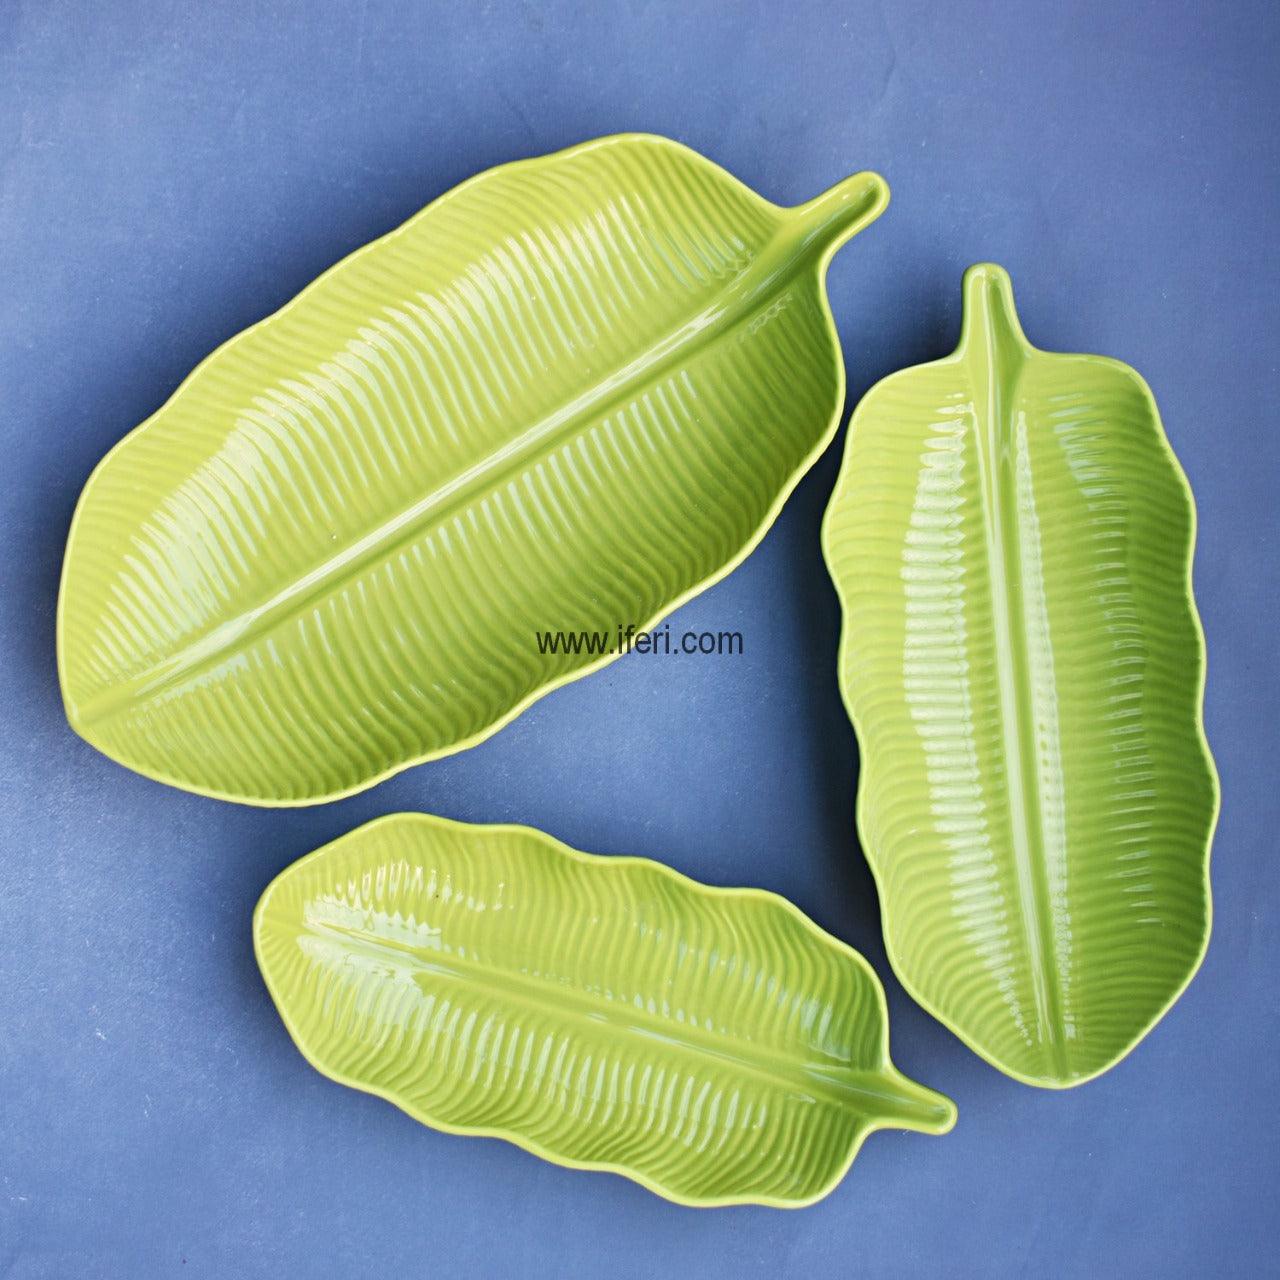 3 Pcs Leaf Shaped Ceramic Serving Dish UT5508 Price in Bangladesh - iferi.com